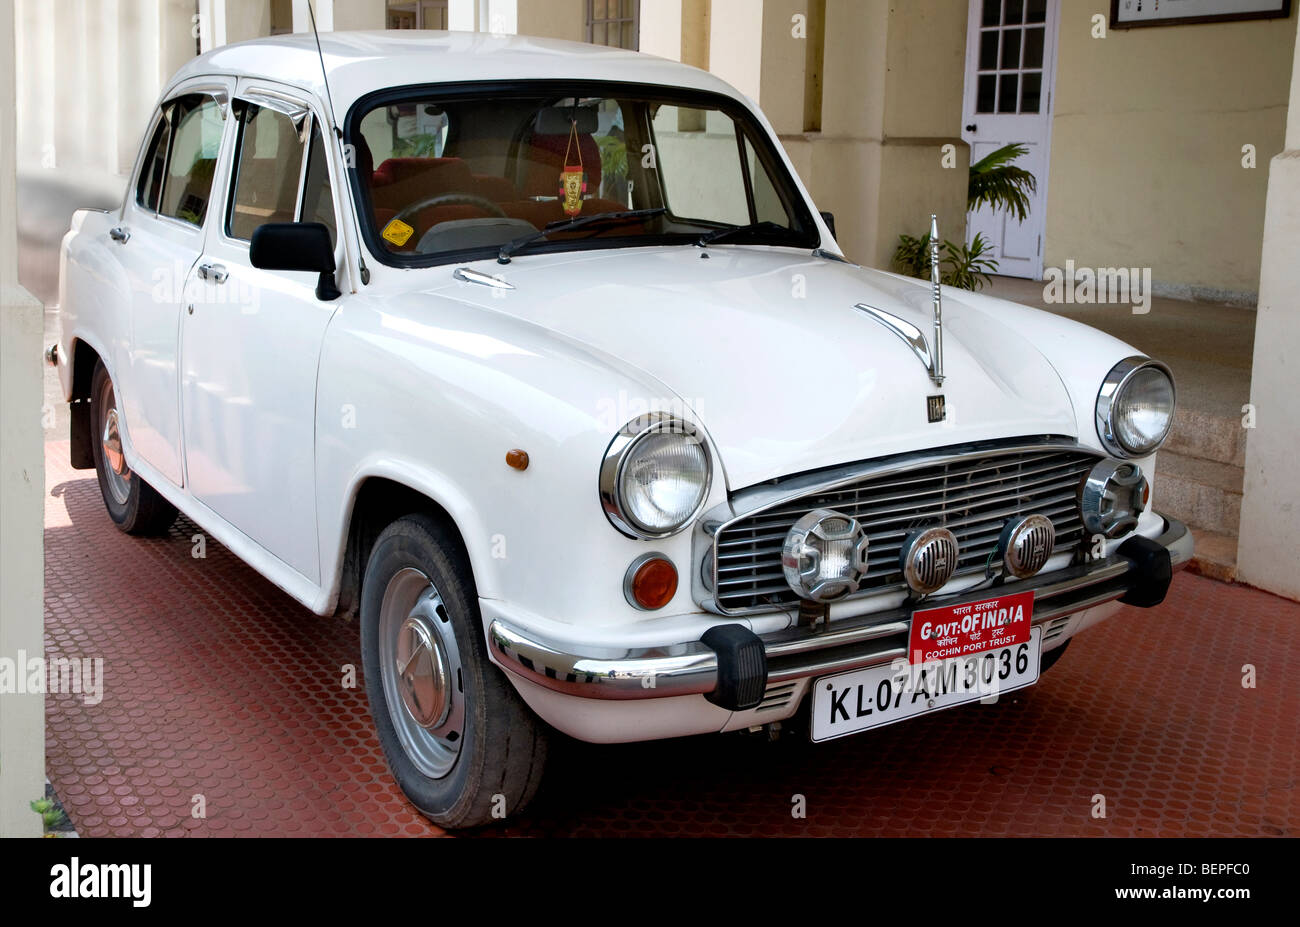 Ambassador car, Cochin, Kerala, India Stock Photo - Alamy